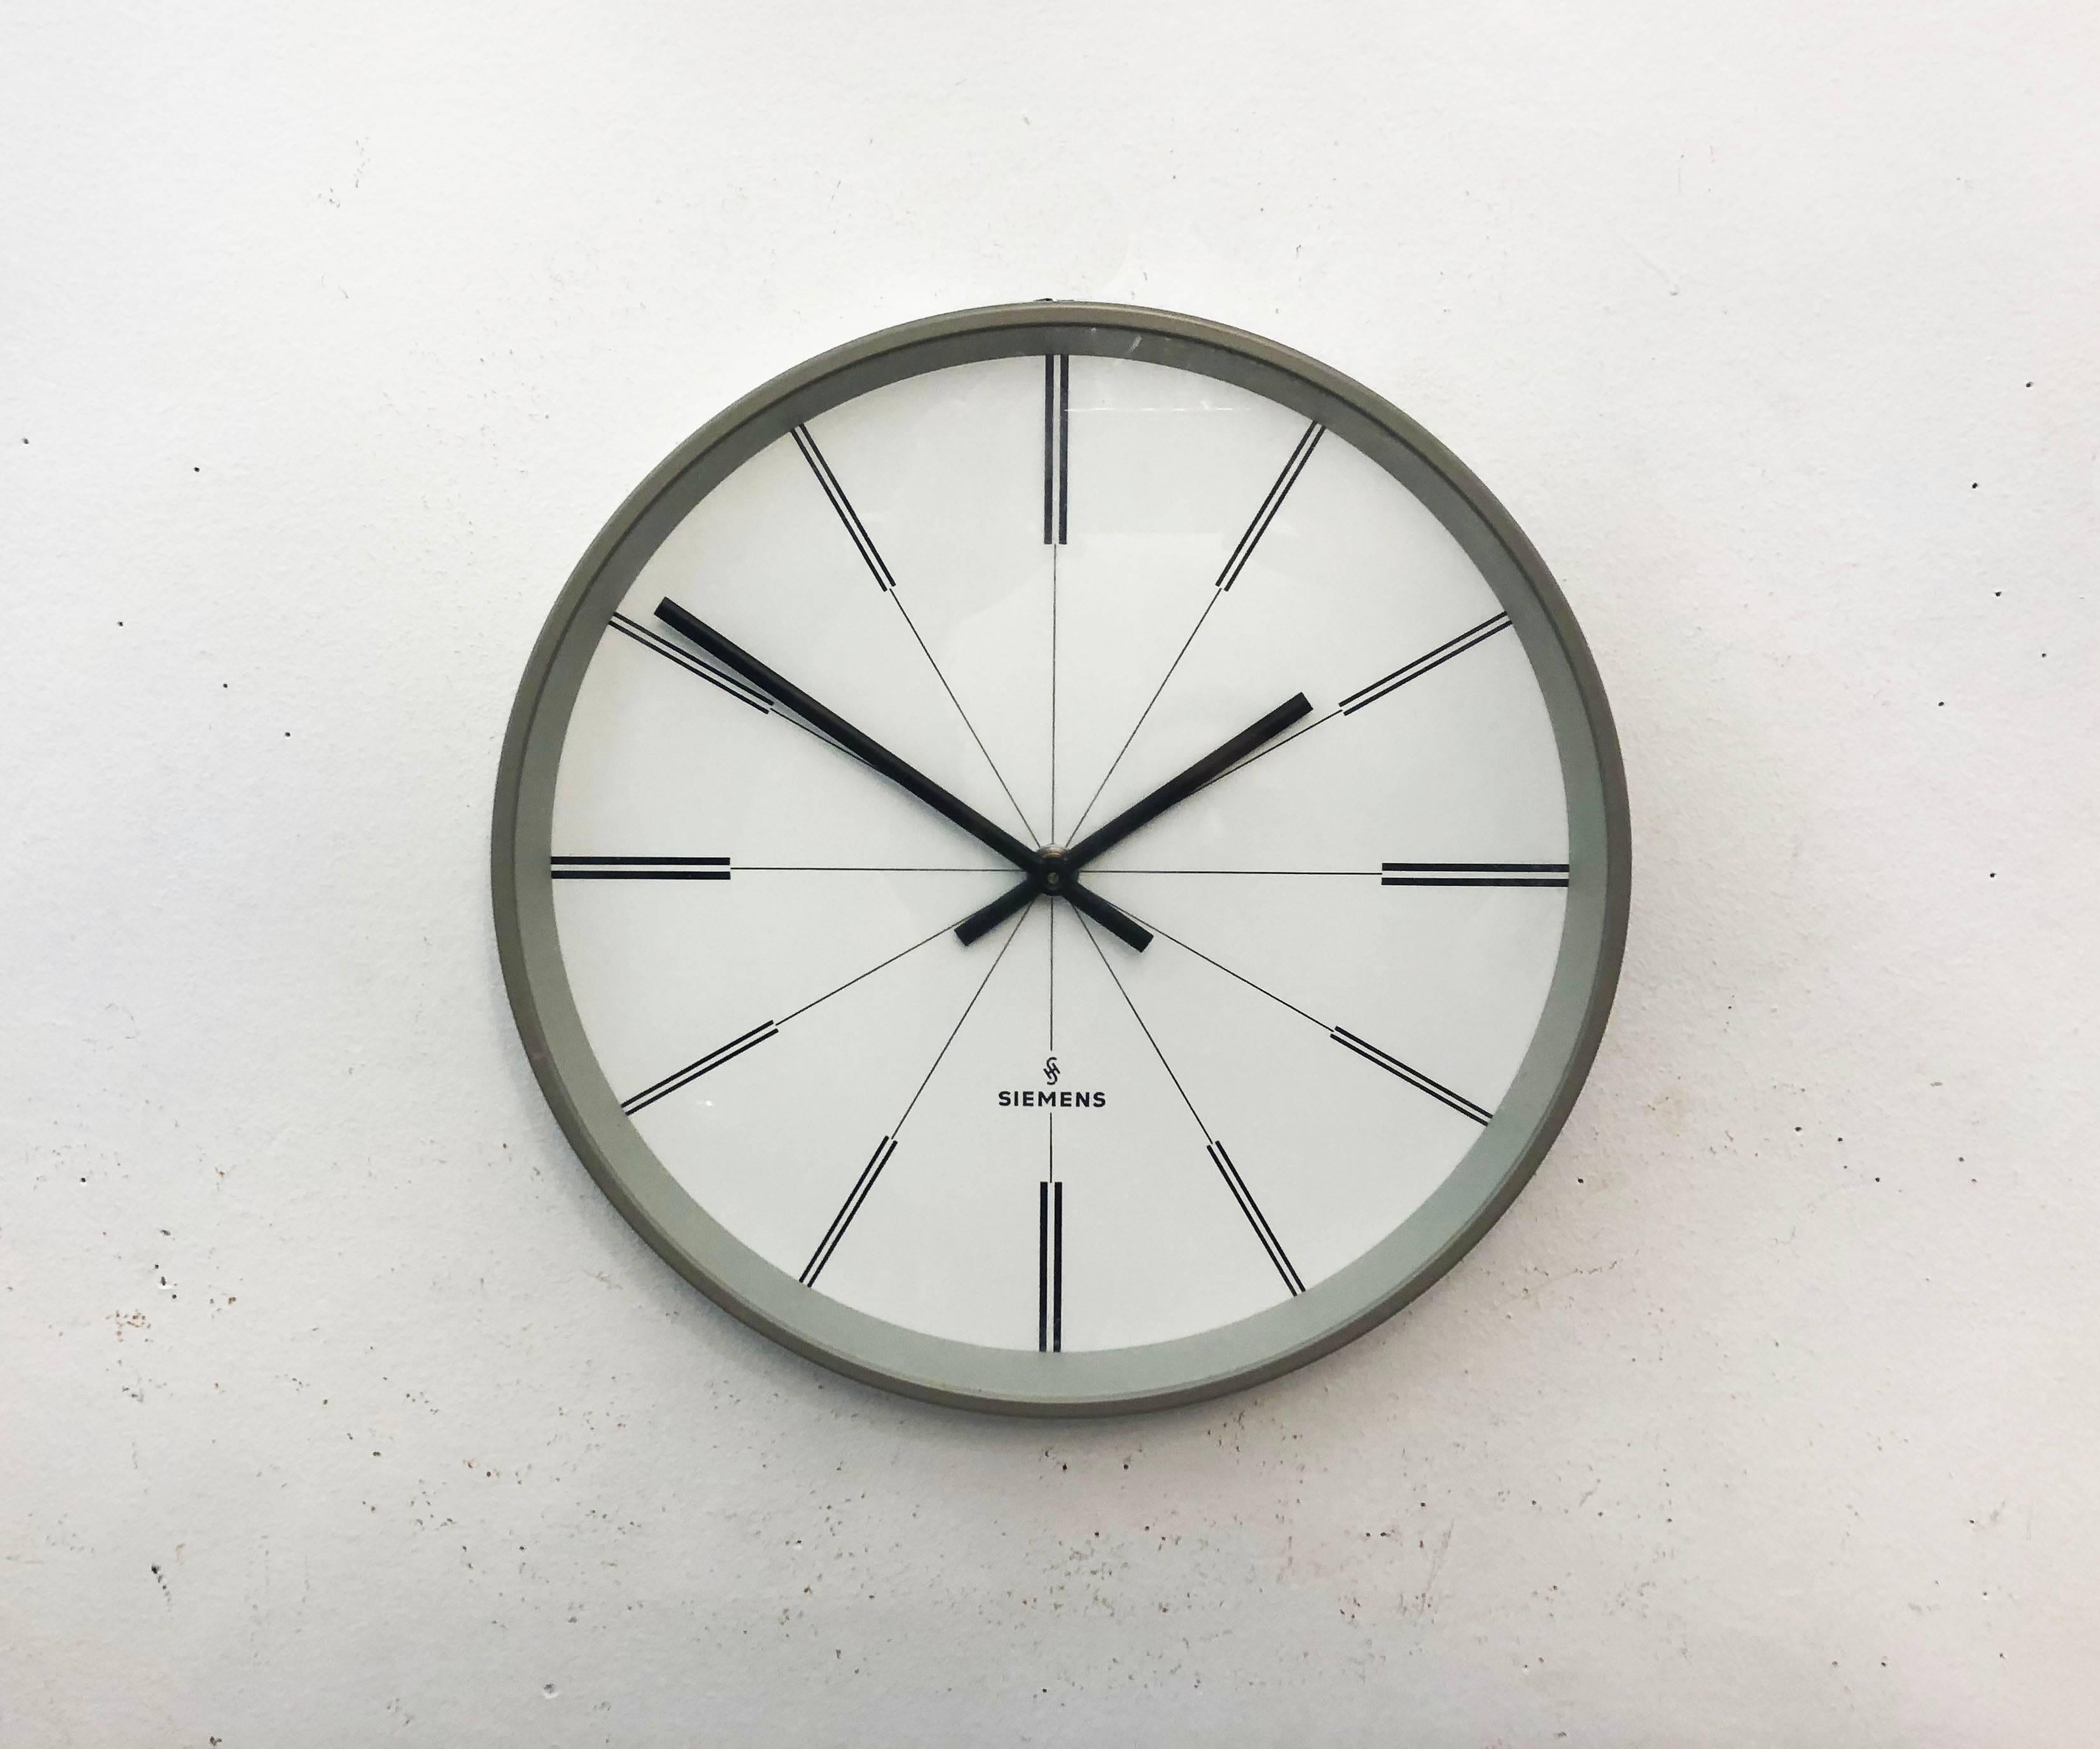 Painted Siemens Industrial Factory or Workshop Wall Clock For Sale